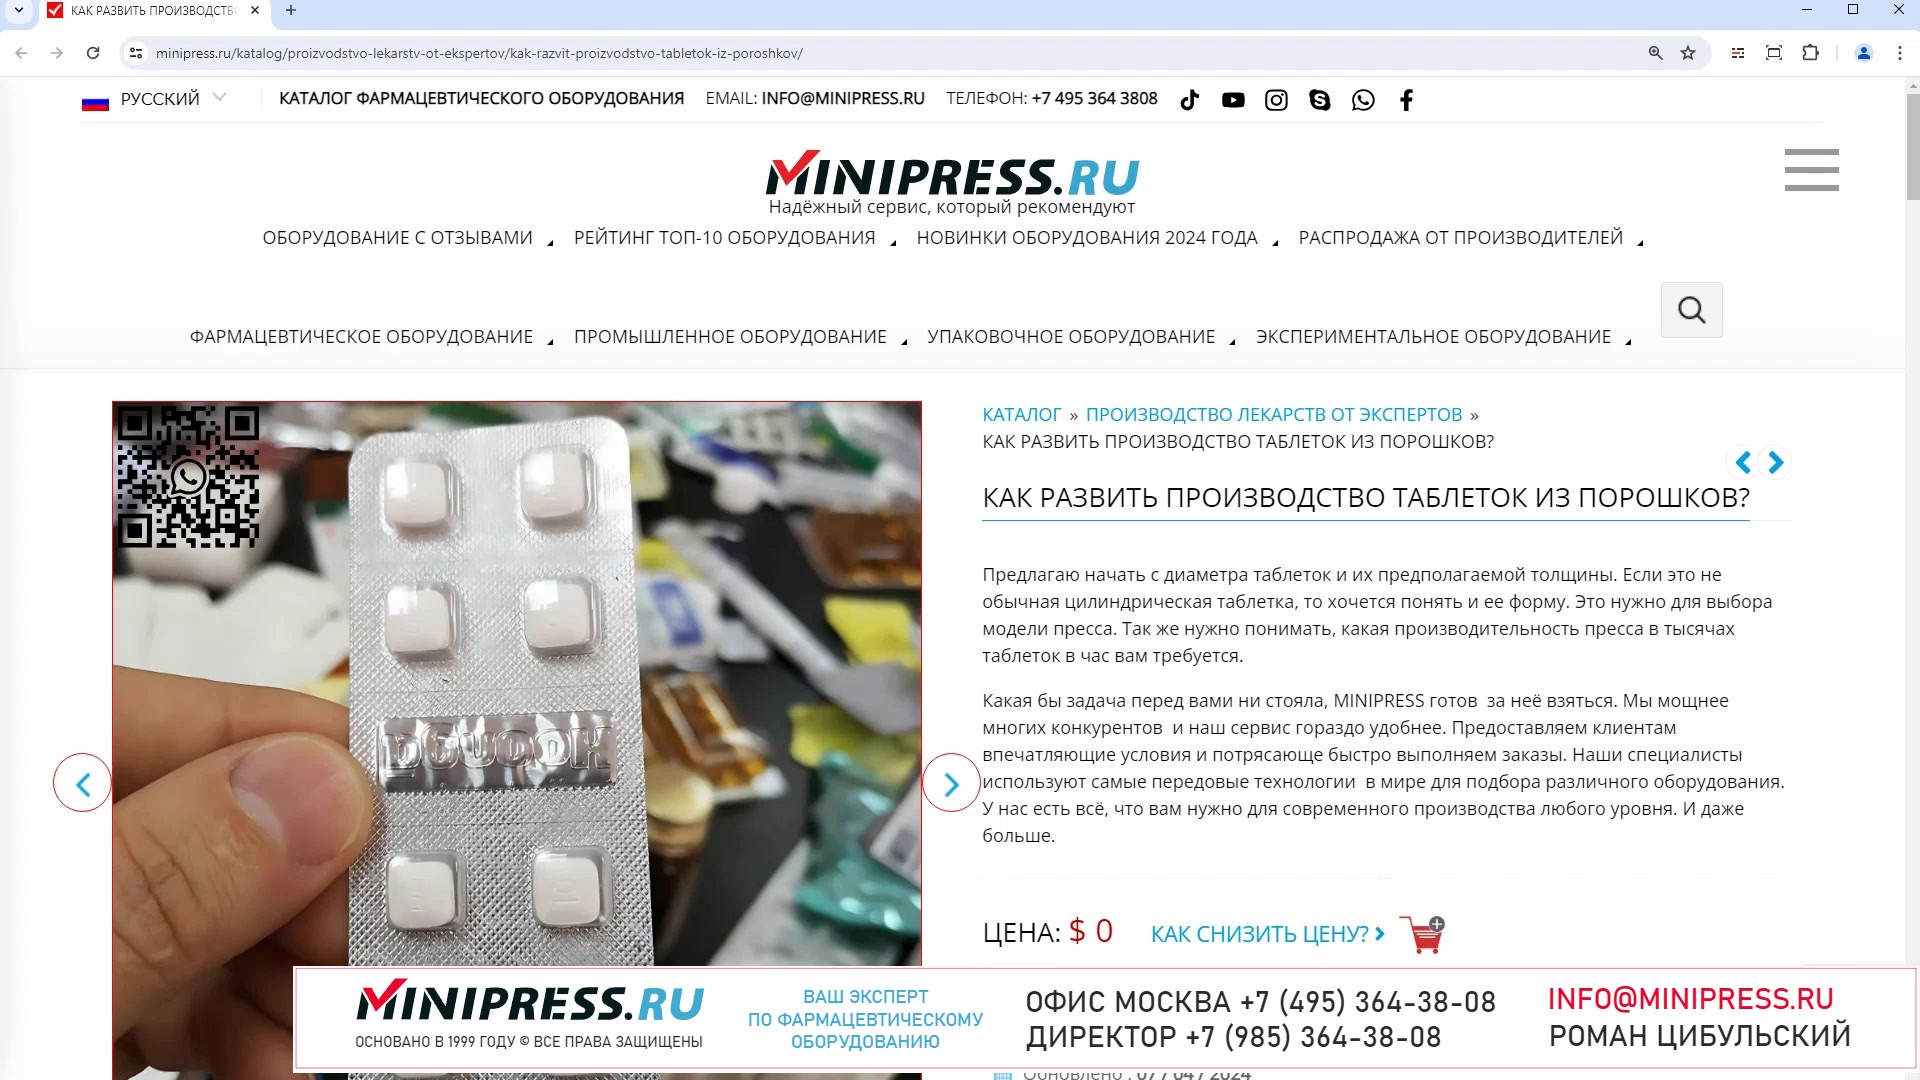 Minipress.ru Как развить производство таблеток из порошков